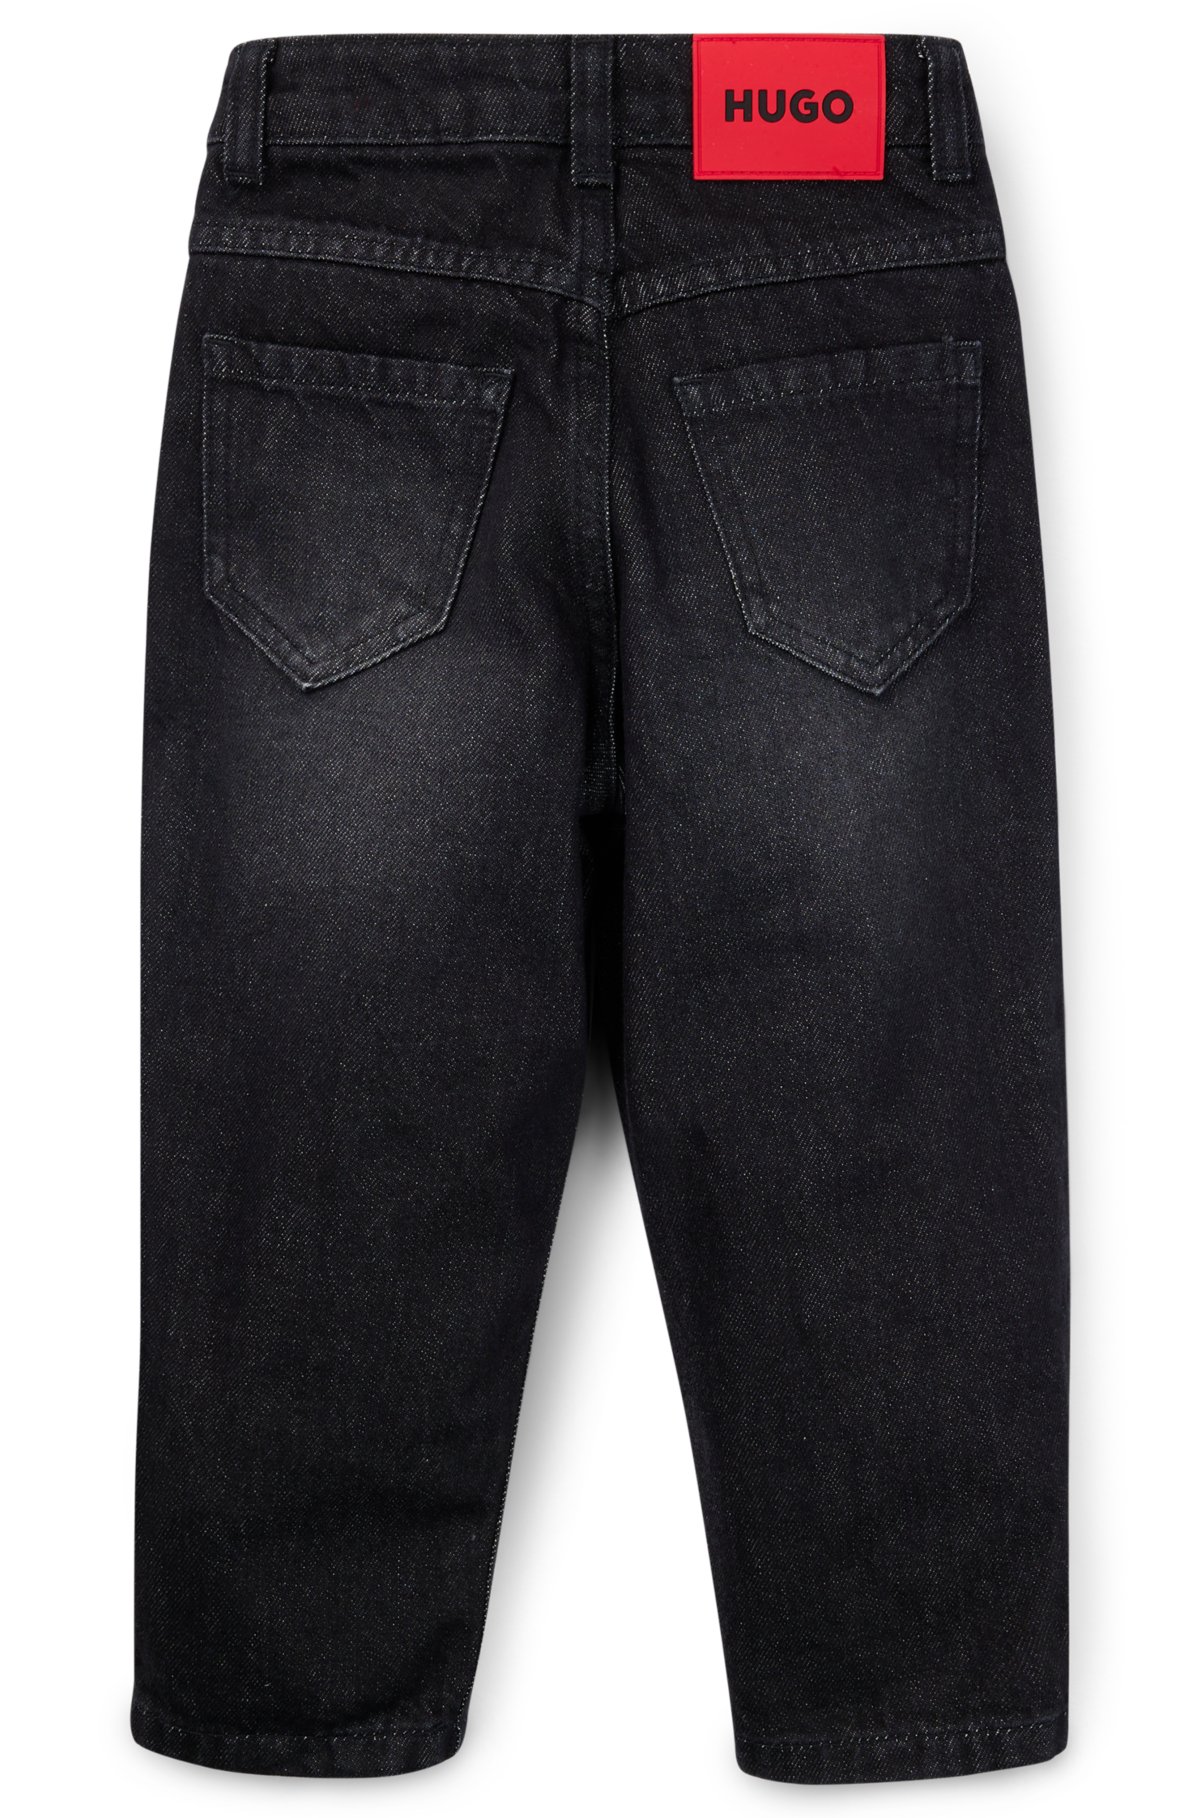 HUGO - Kids' loose-fit jeans in black denim